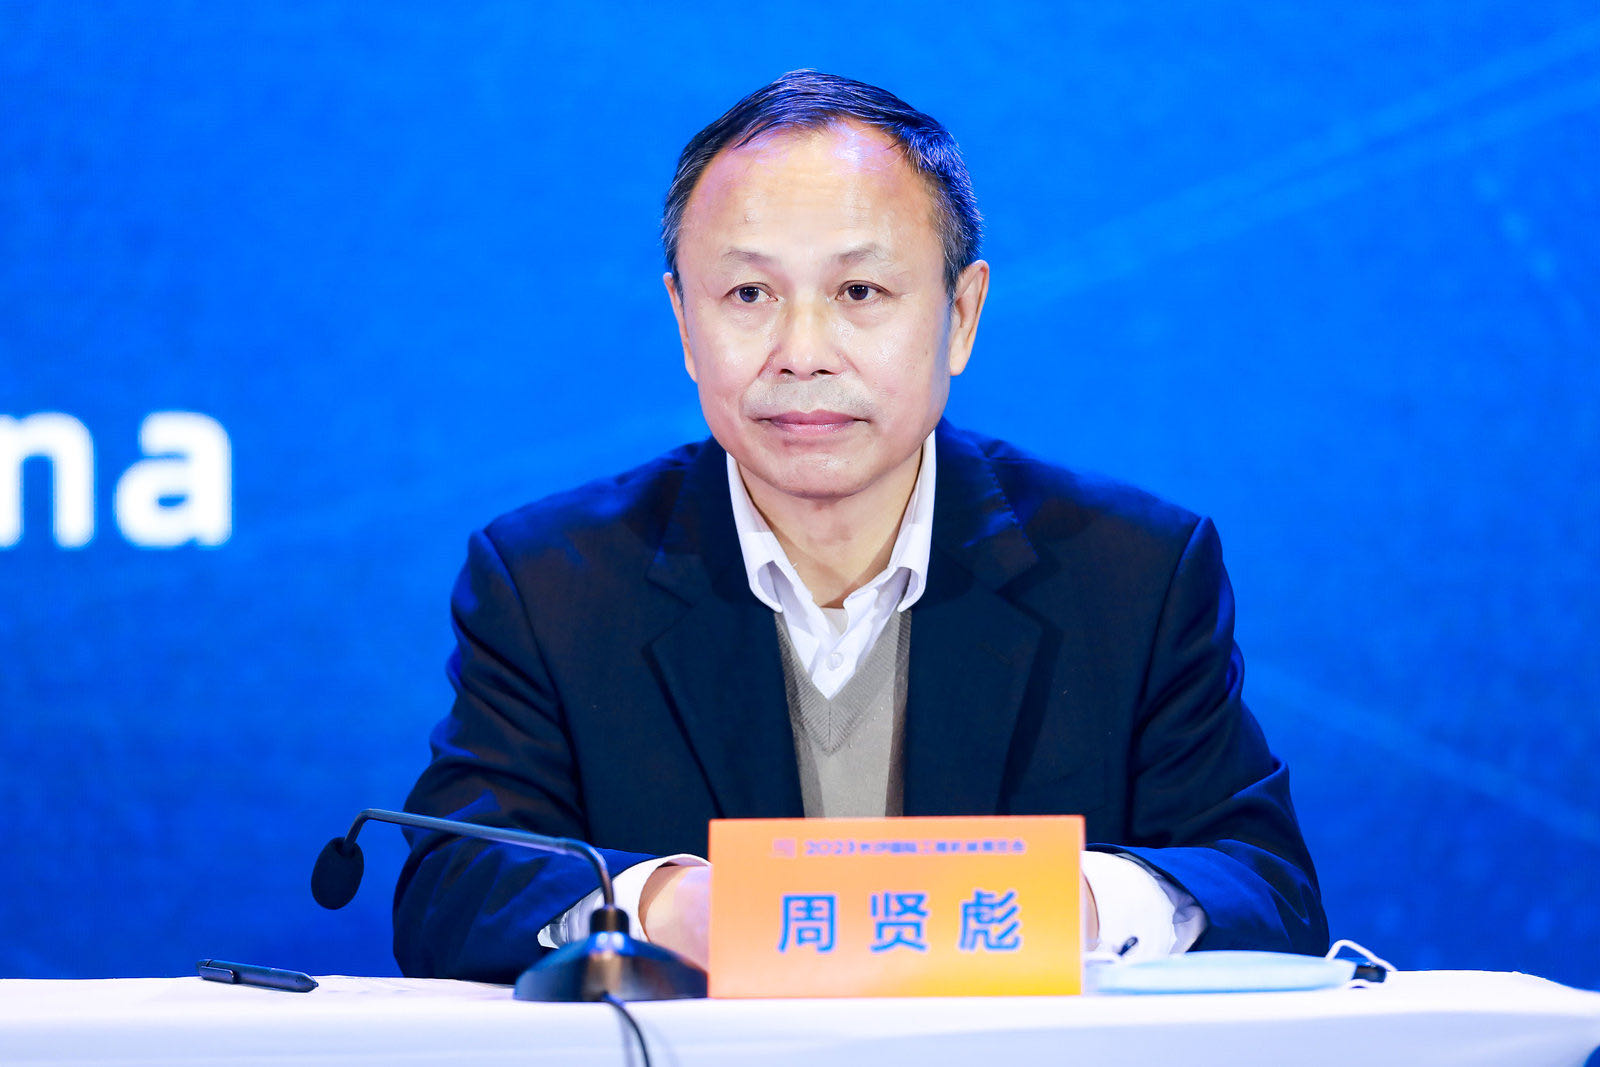 Zhou Xianbiao, secretary-general of the China Construction Machinery Society <br> Image source: Changsha International Construction Equipment Exhibition (CICEE)